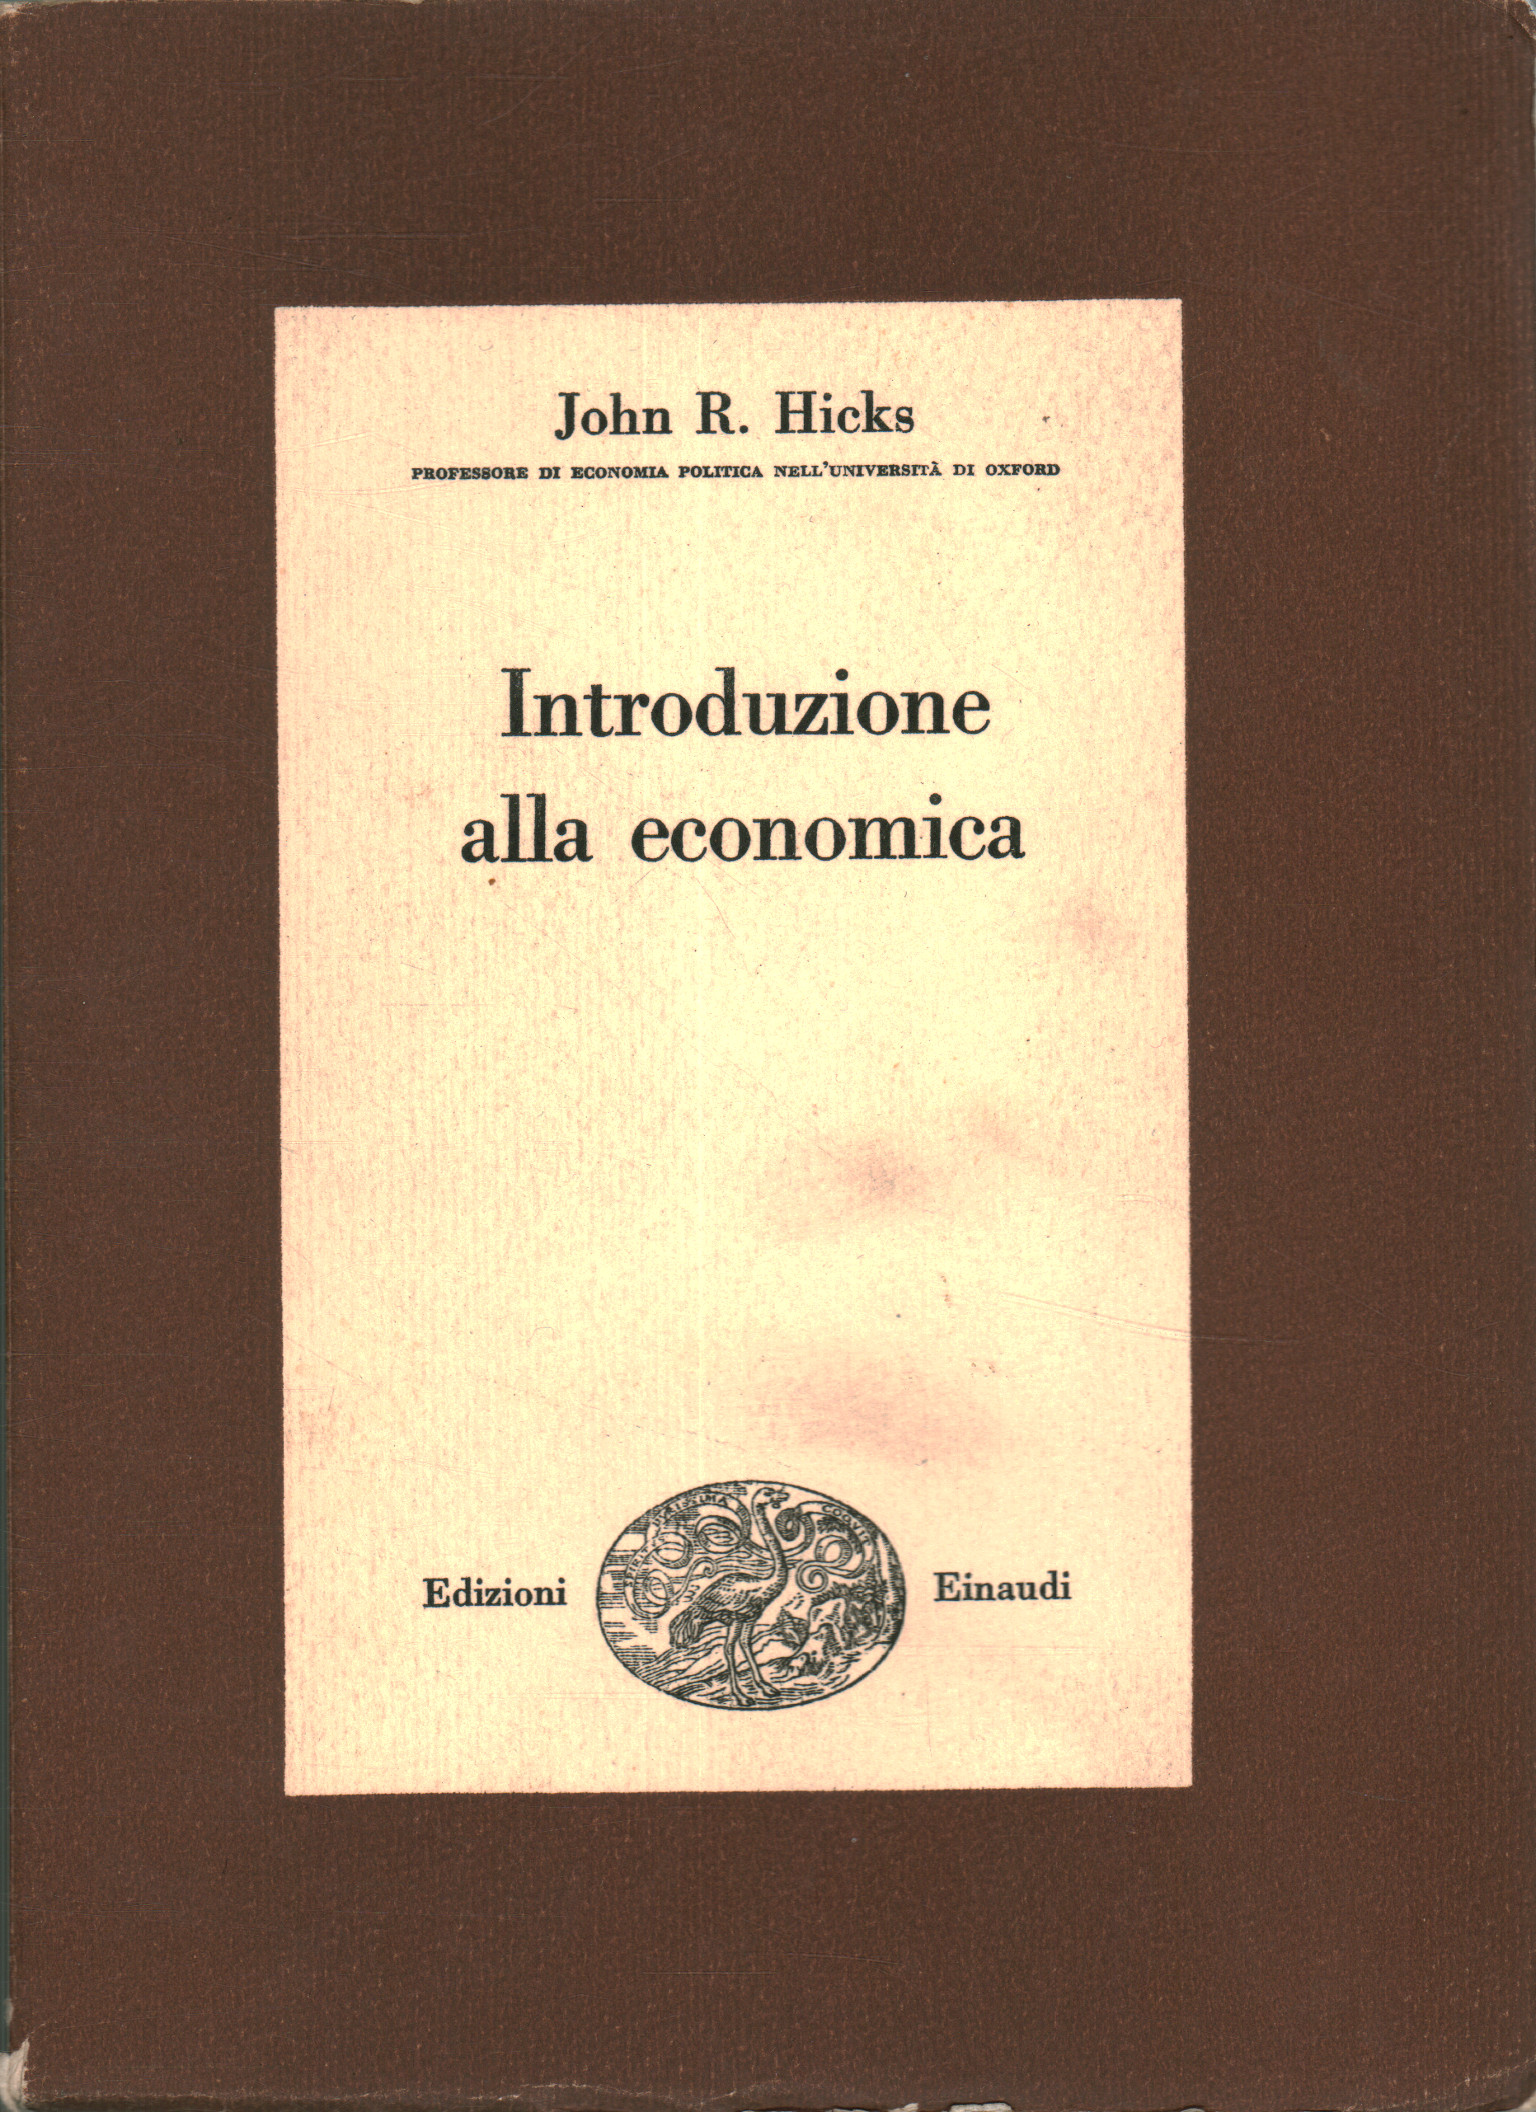 Introduction to Economics, John Richard Hicks